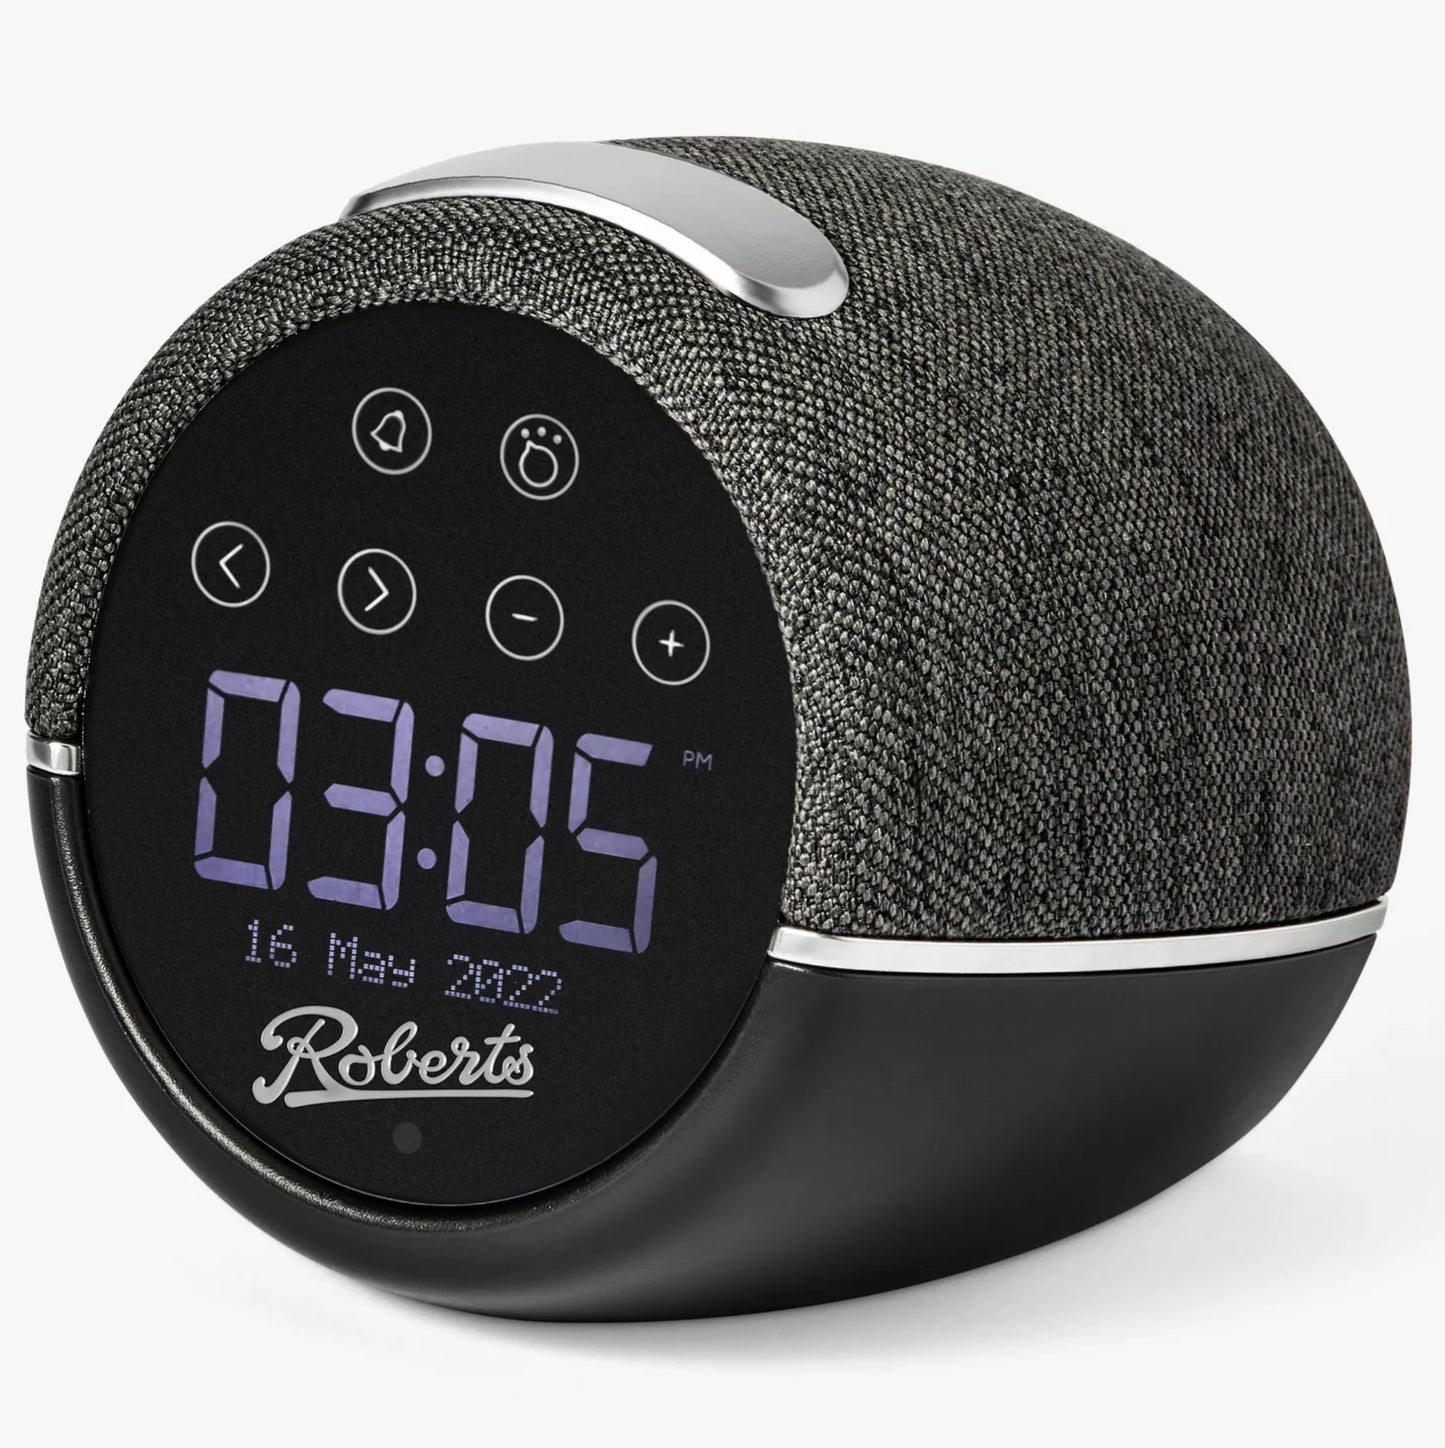 Roberts Zen Plus - Alarm Clock, DAB+ radio, Bluetooth Speaker, USB Charging Port